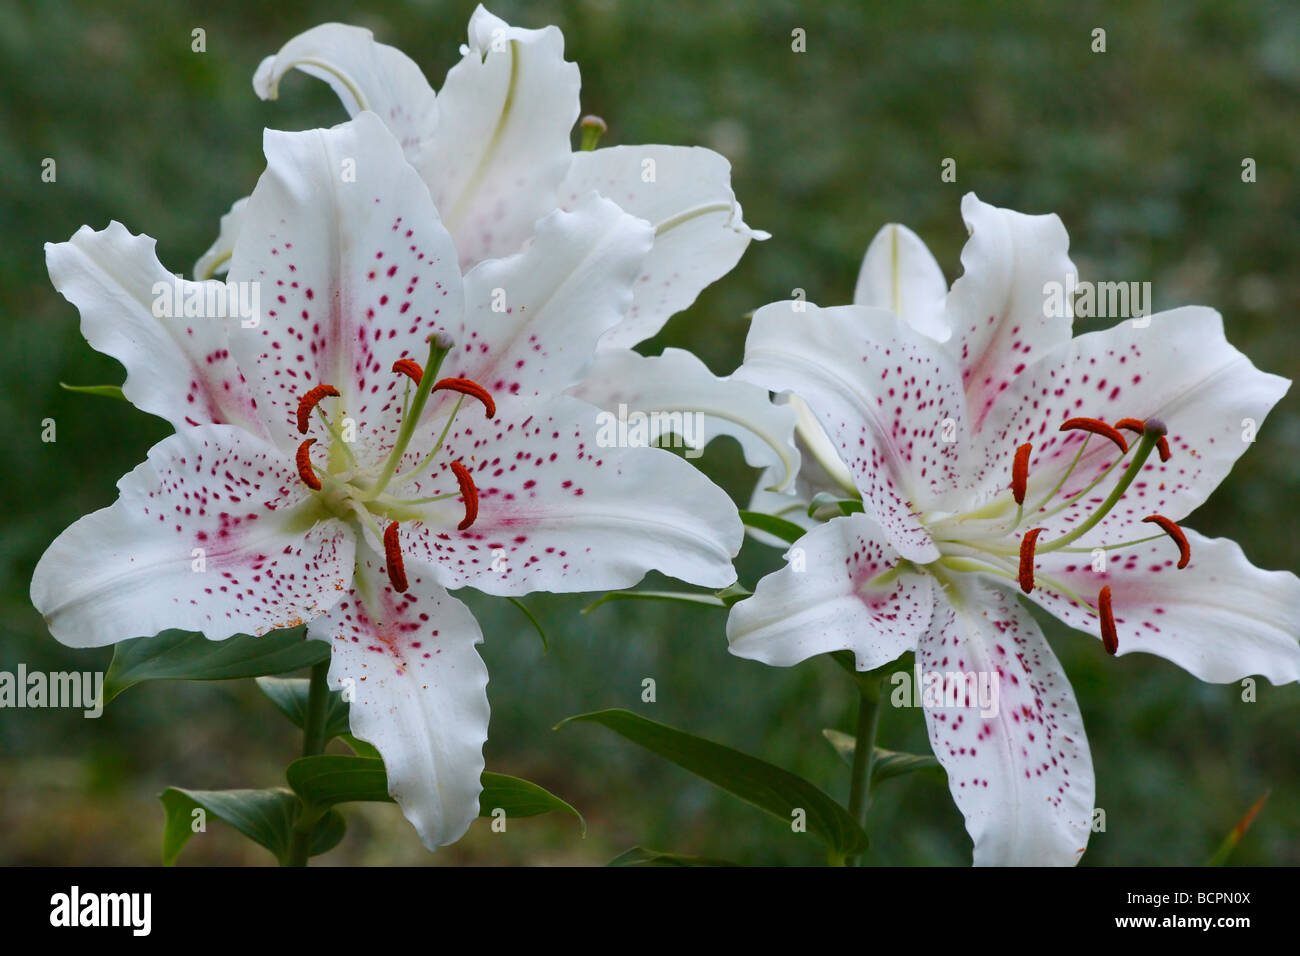 White LILIUM STAR GAZER flowers on natural background close up closeup detail display stamen pollen Stock Photo